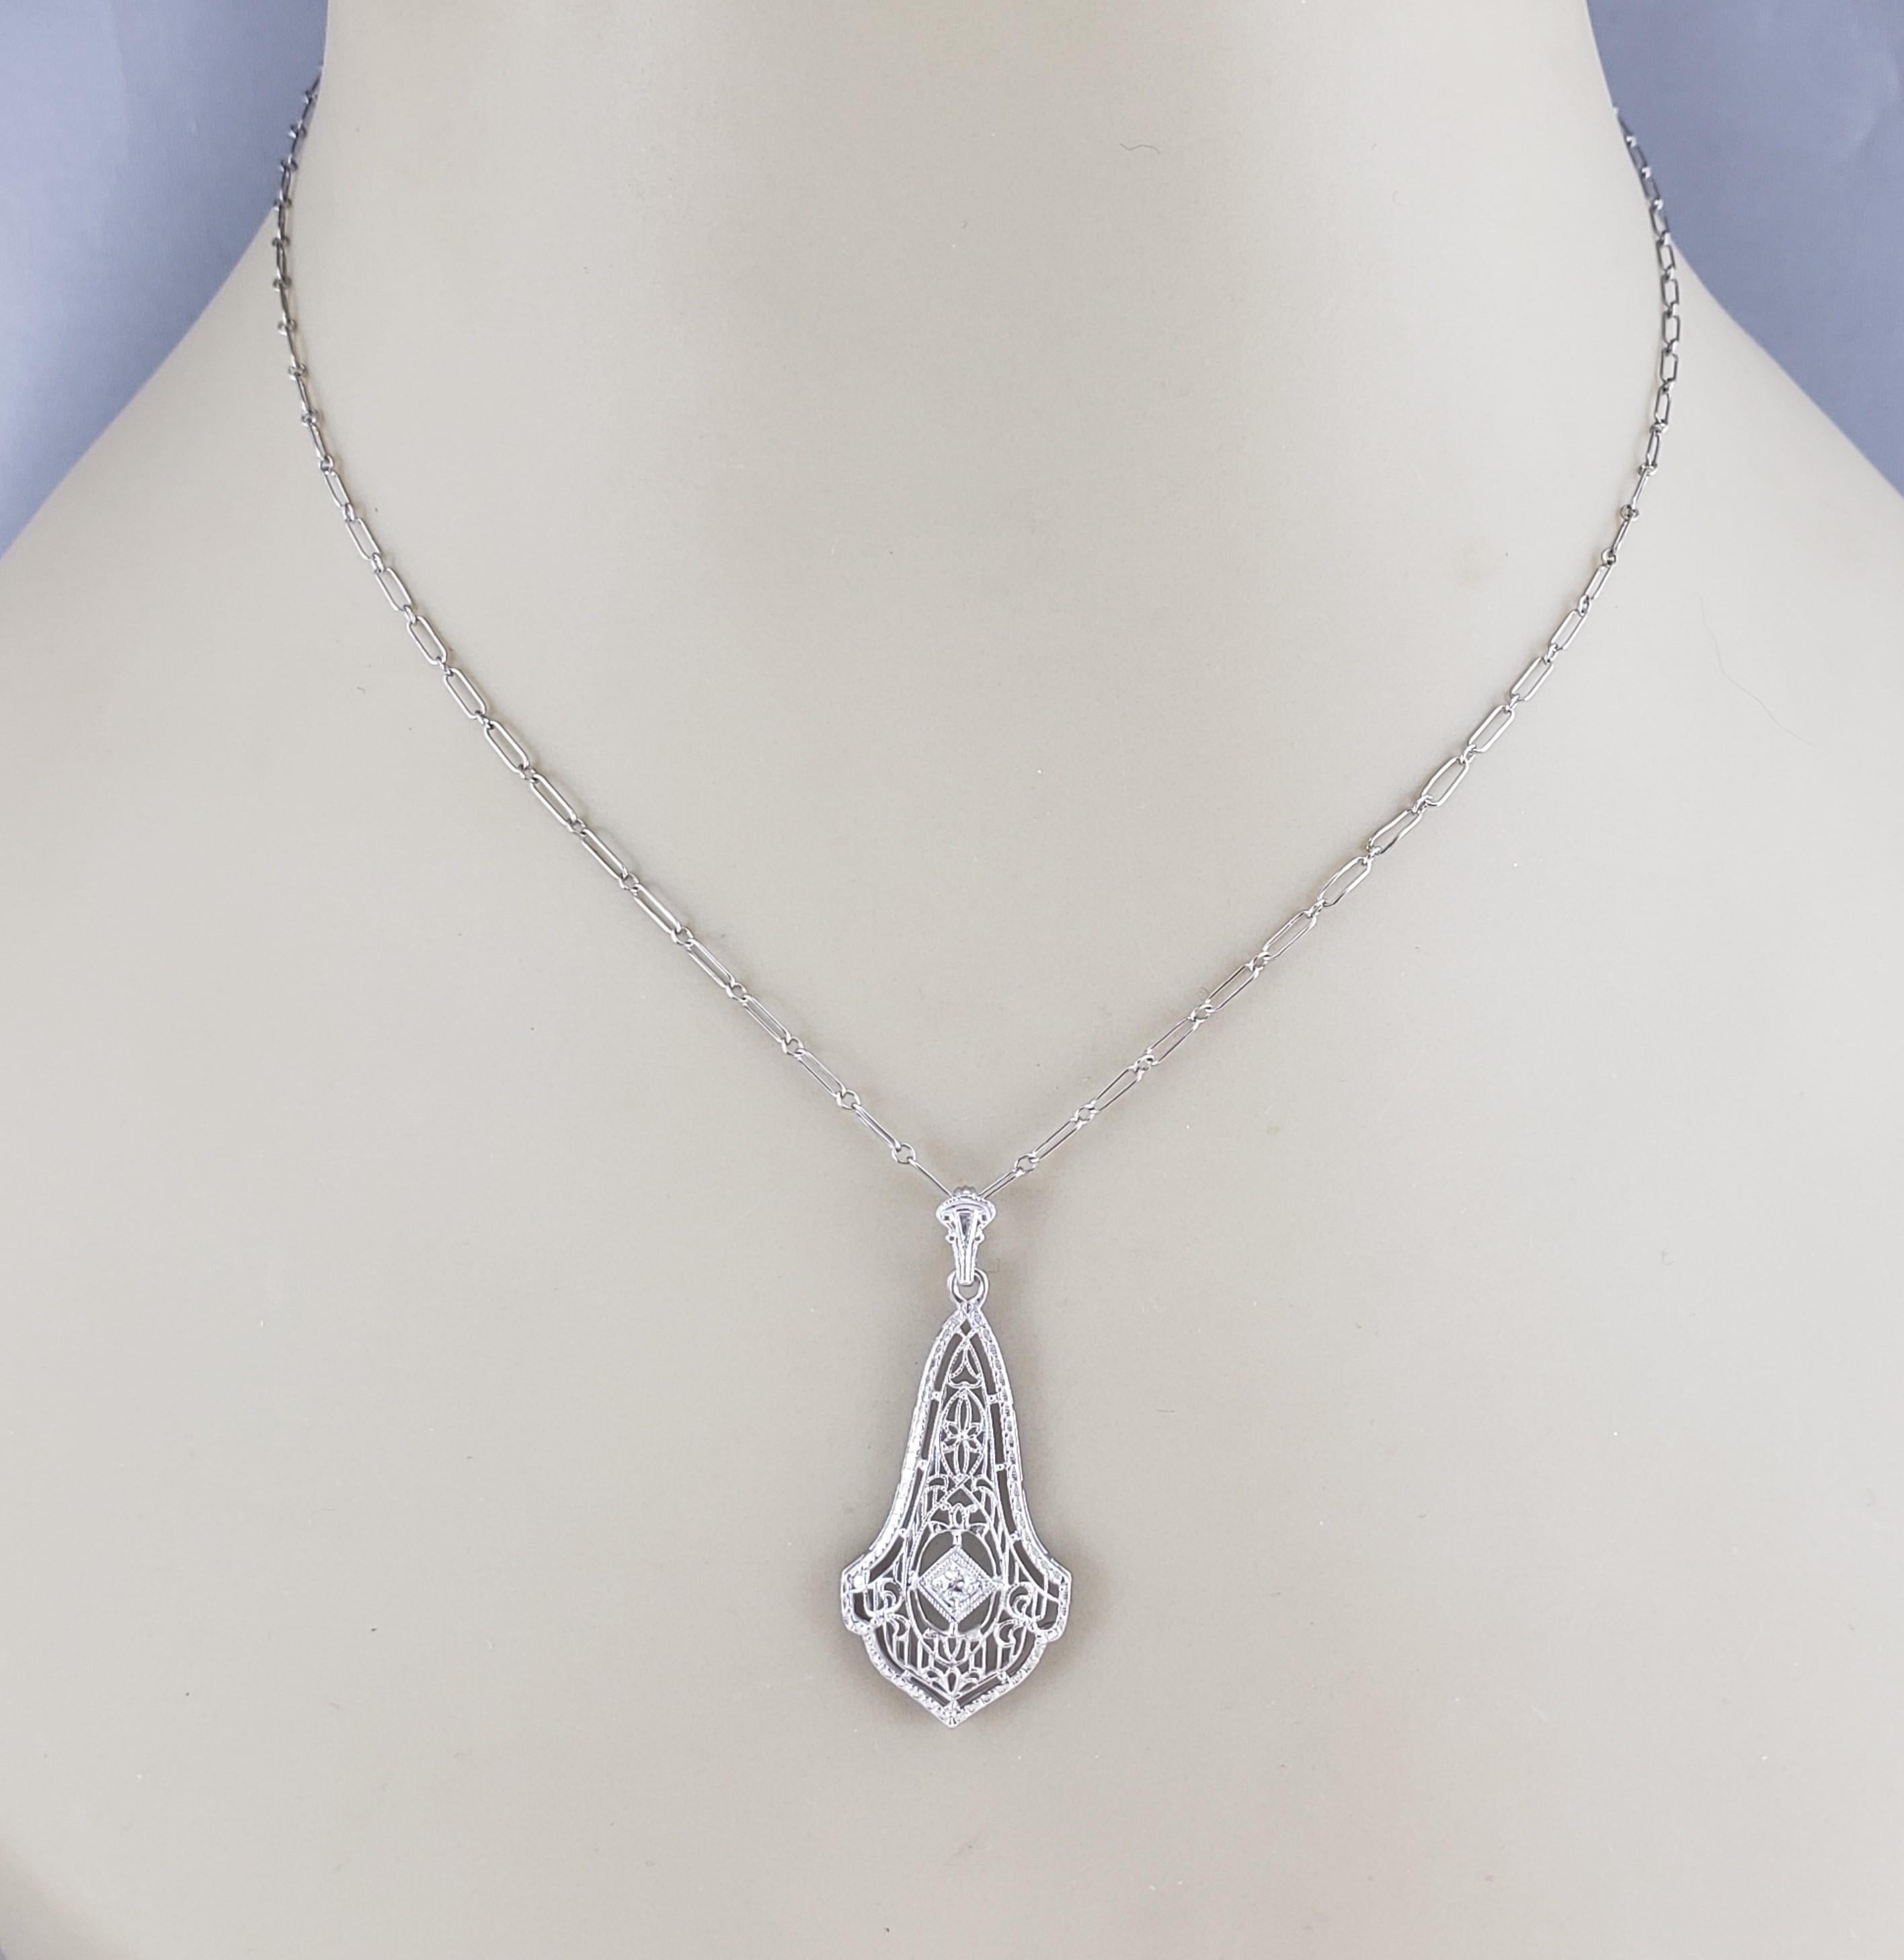 10 Karat White Gold Filigree Diamond Pendant Necklace #16345 For Sale 1